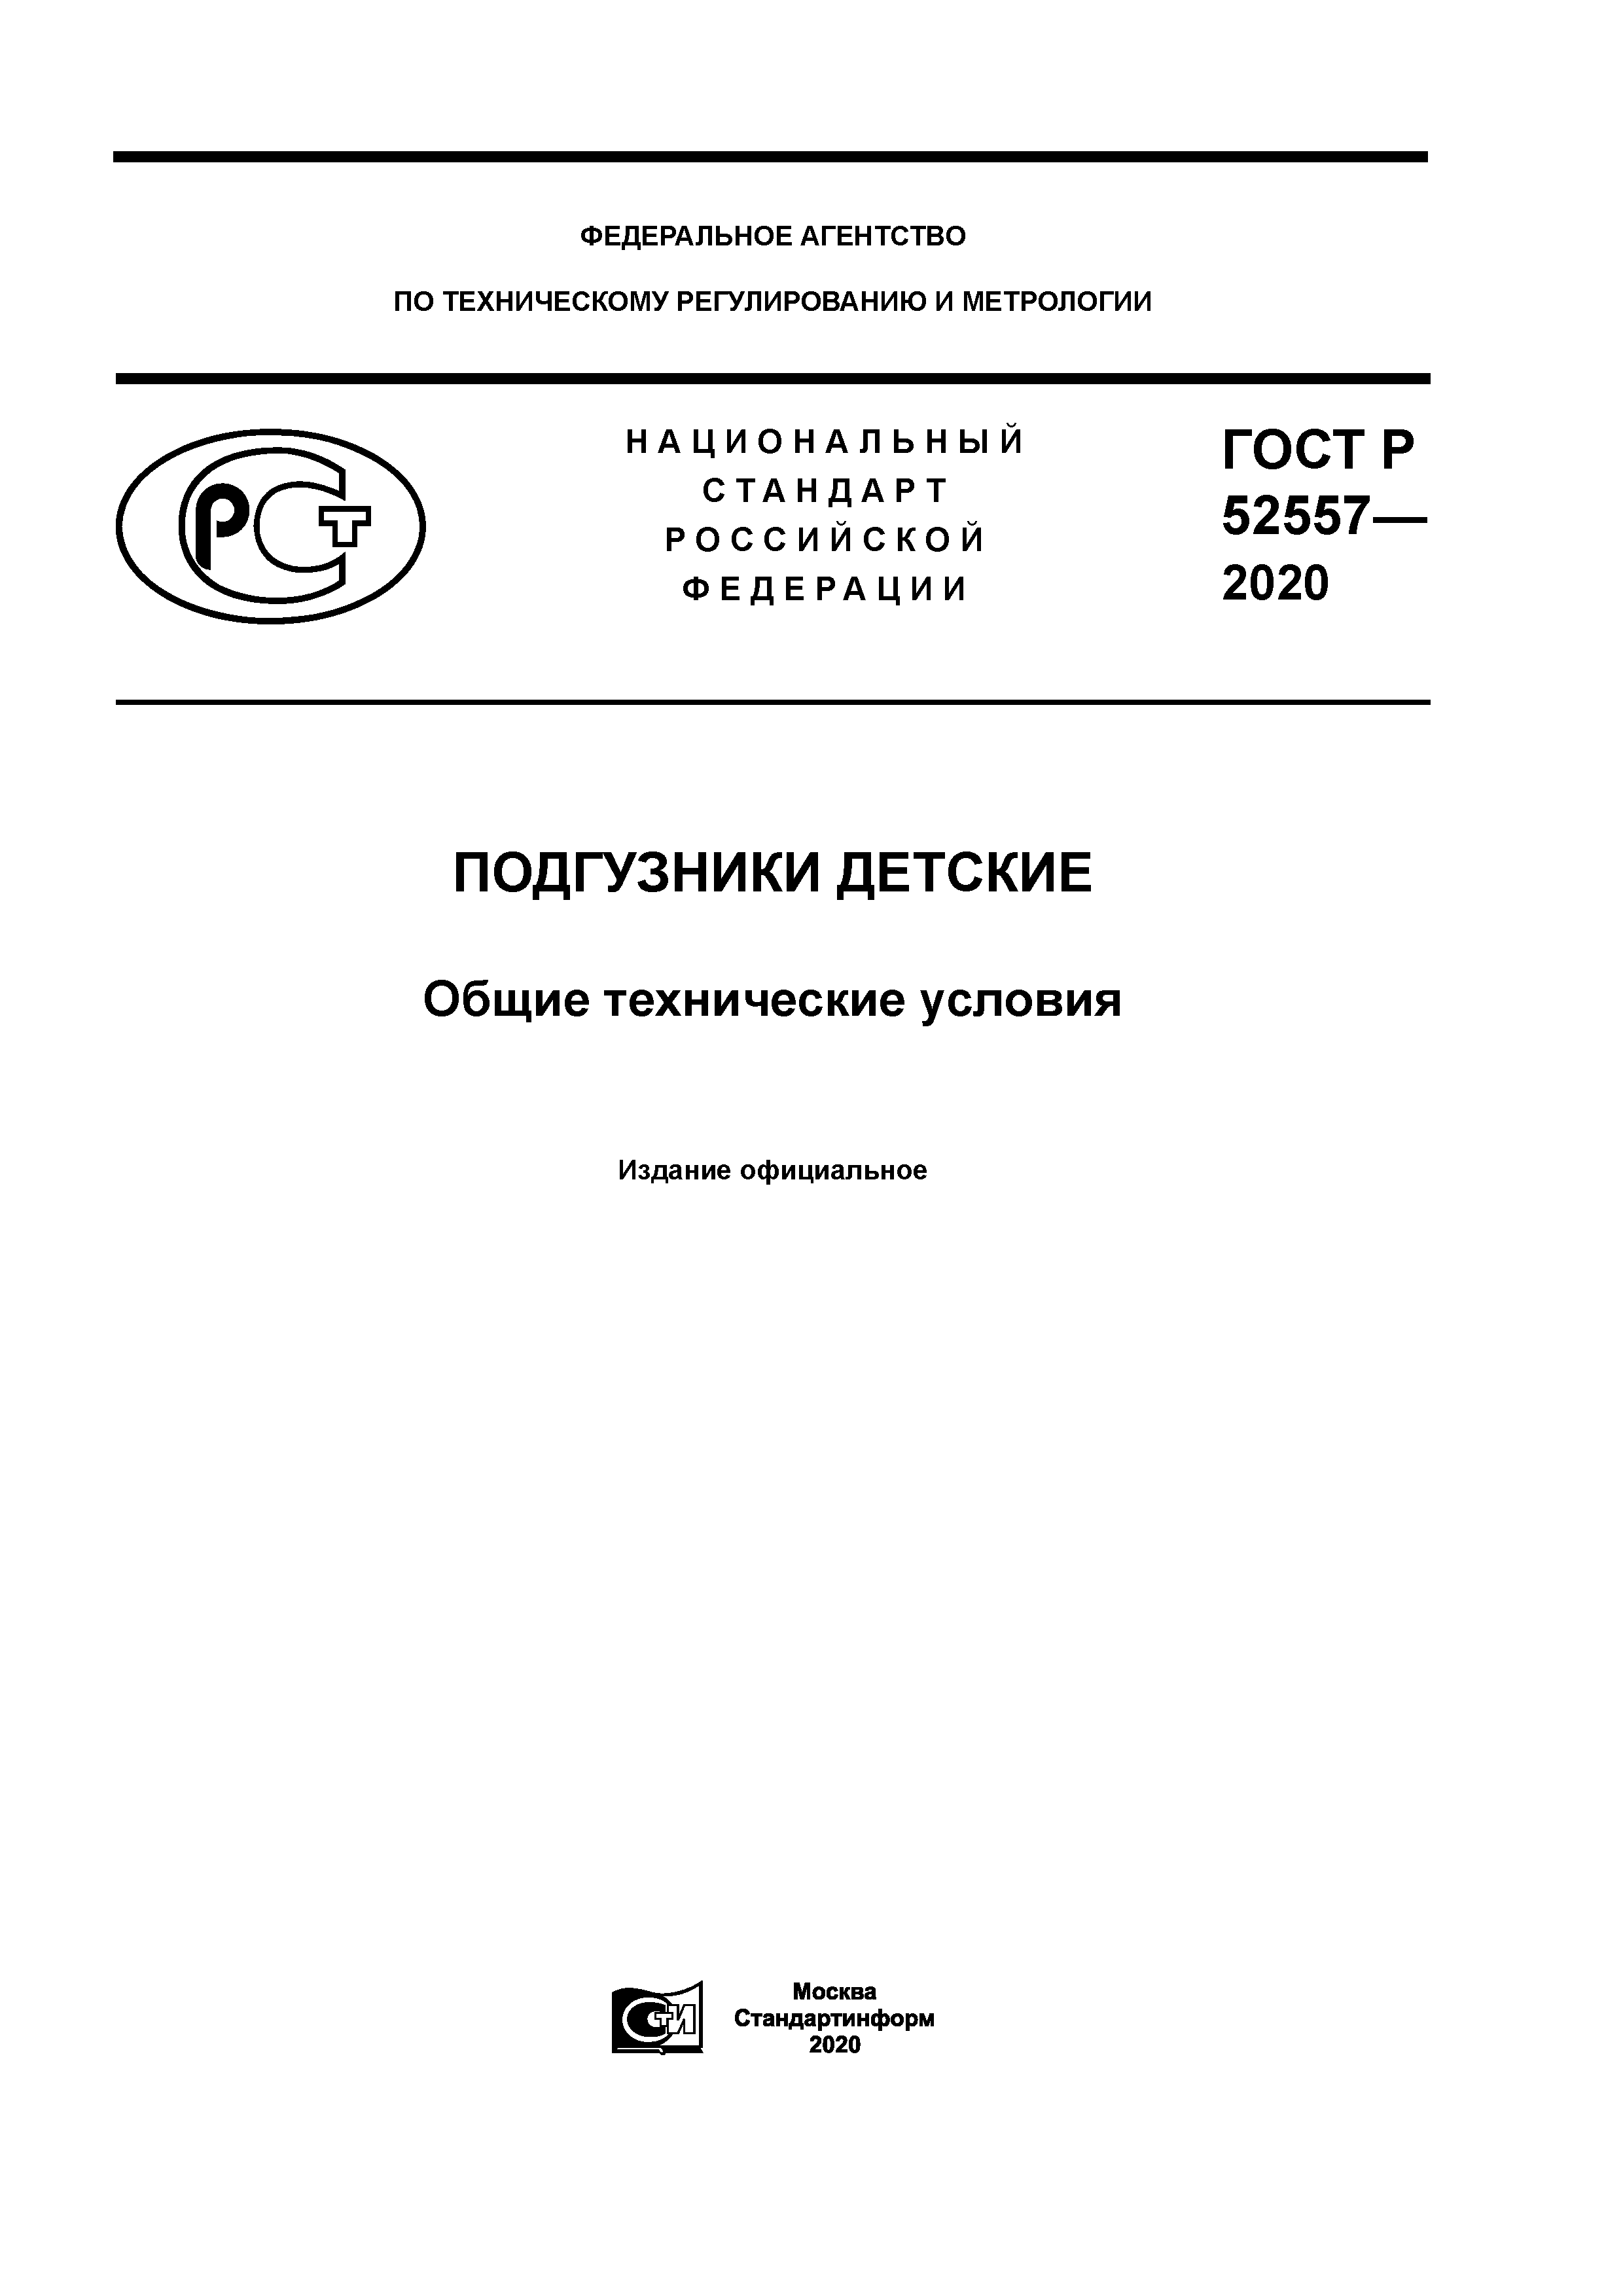 ГОСТ Р 52557-2020